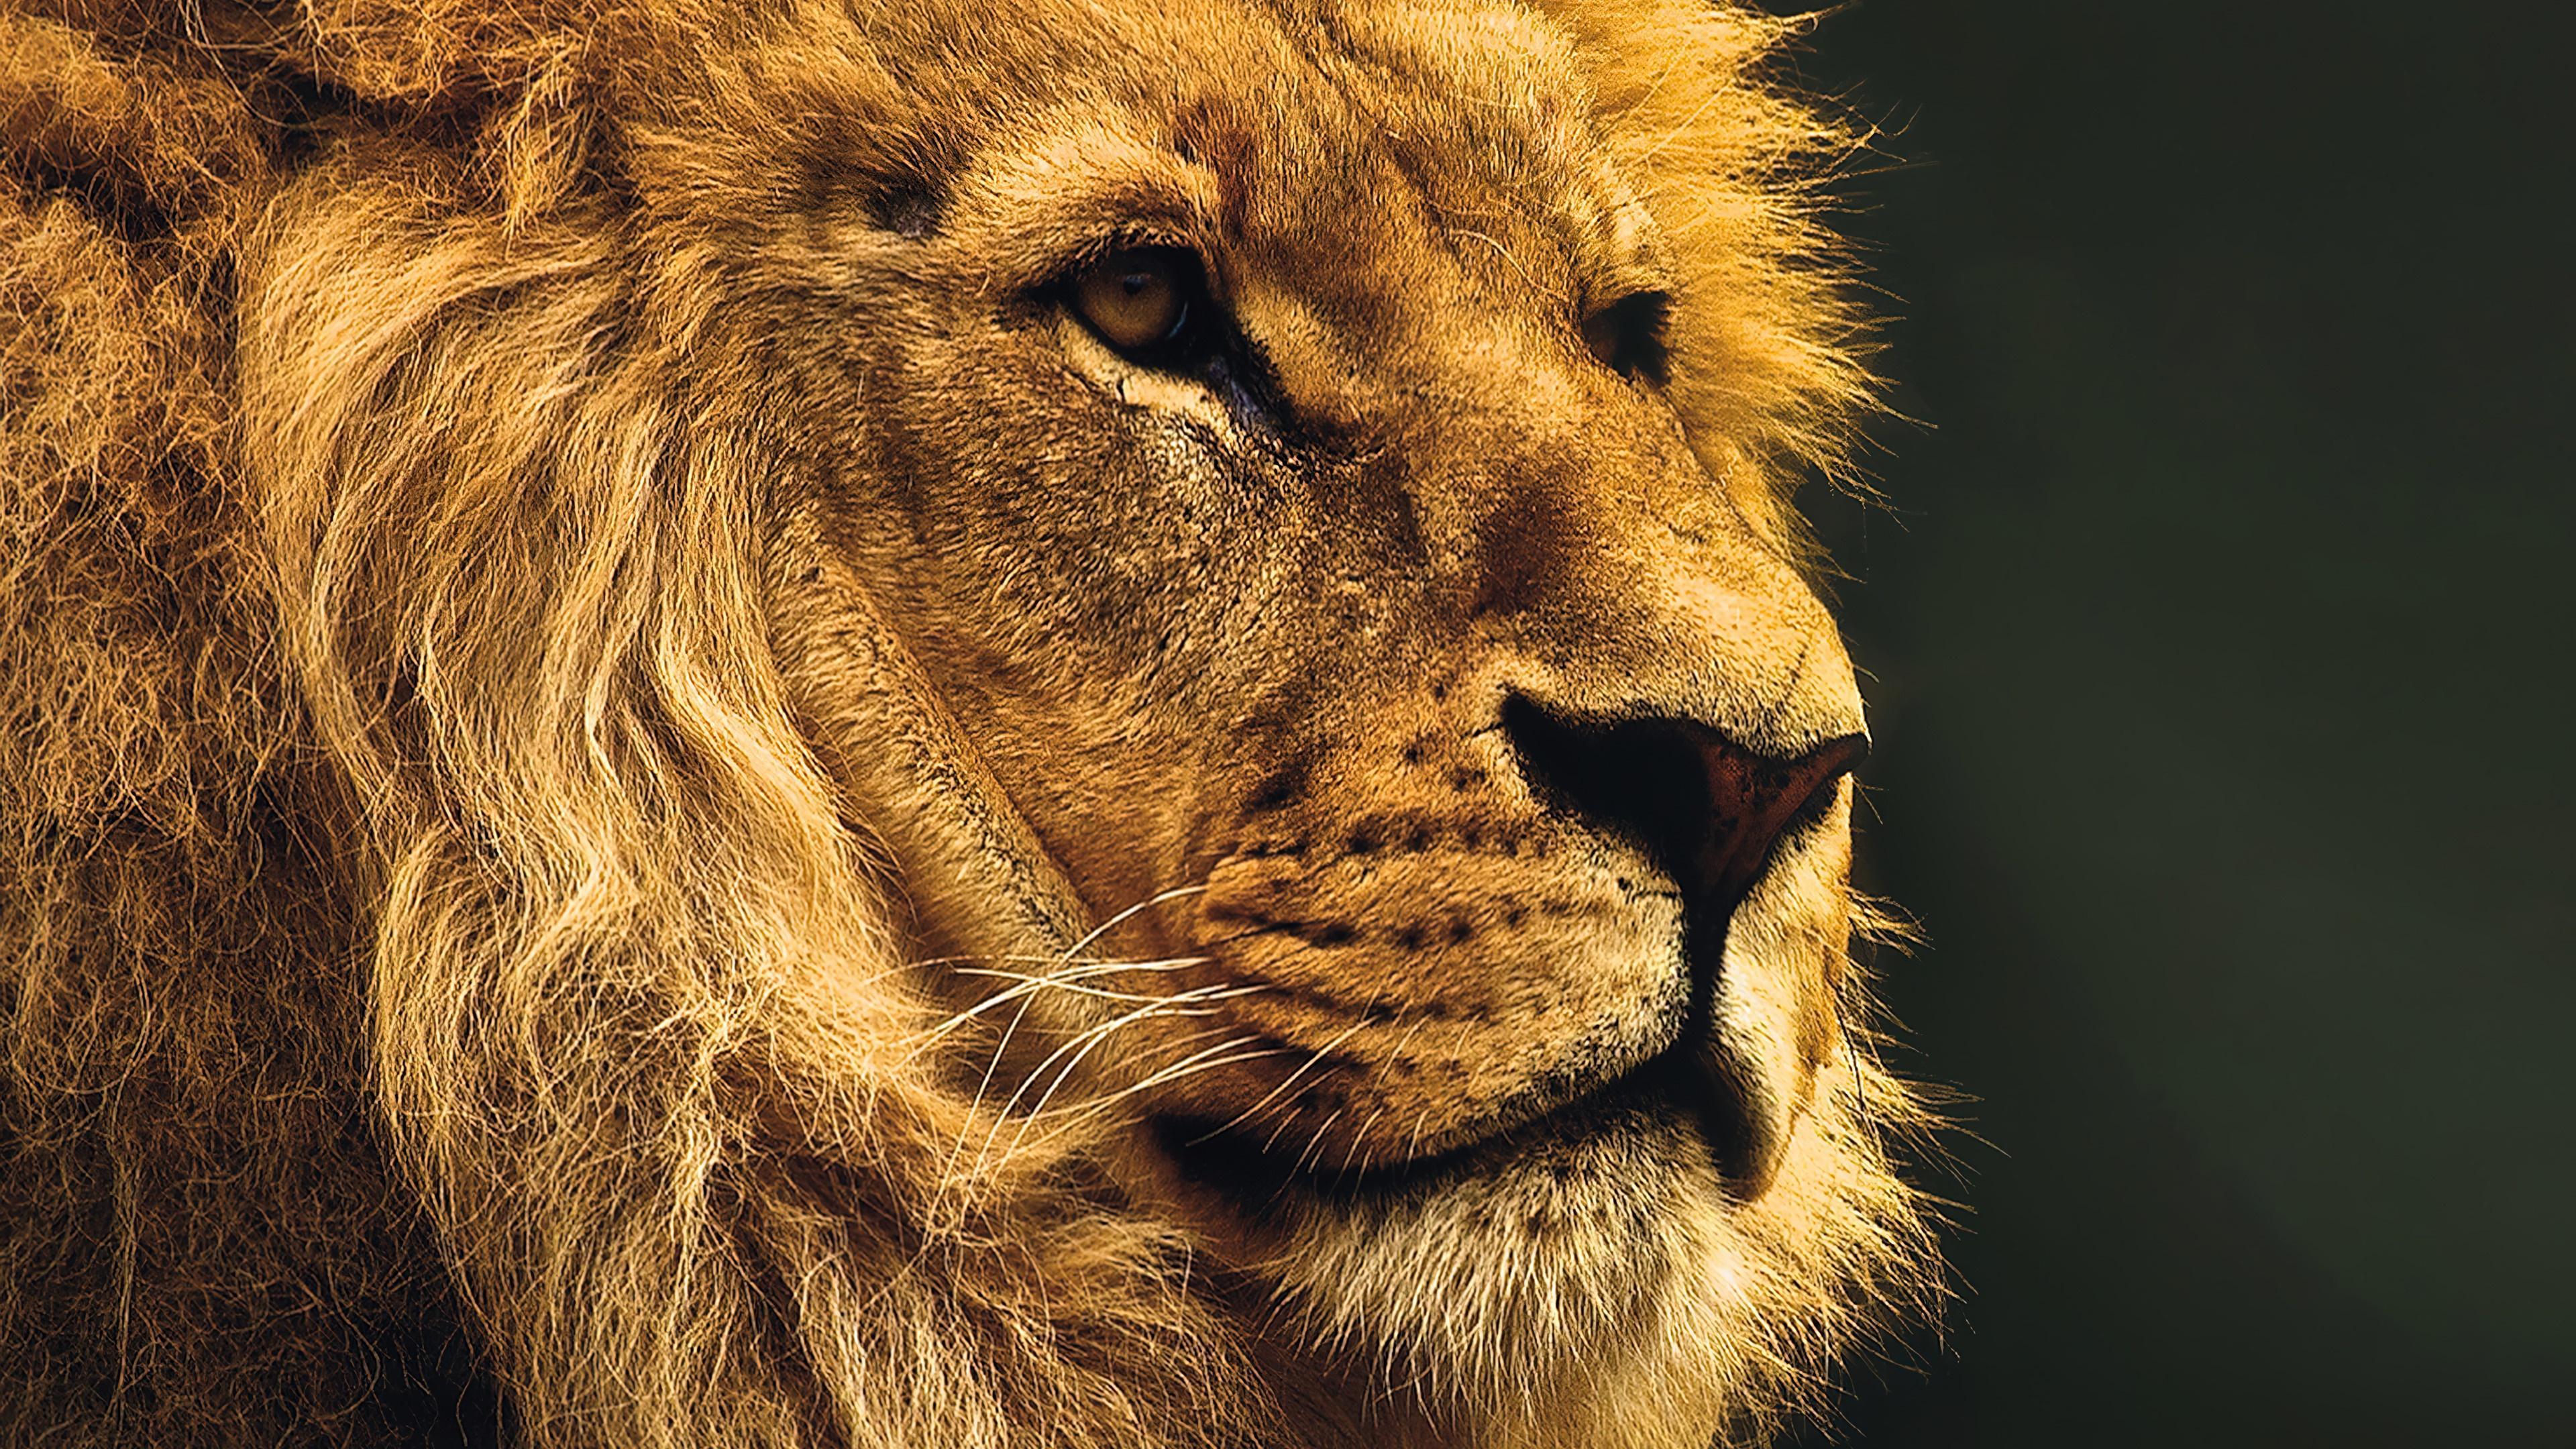 HD wallpaper, Lion, 4K, Animal